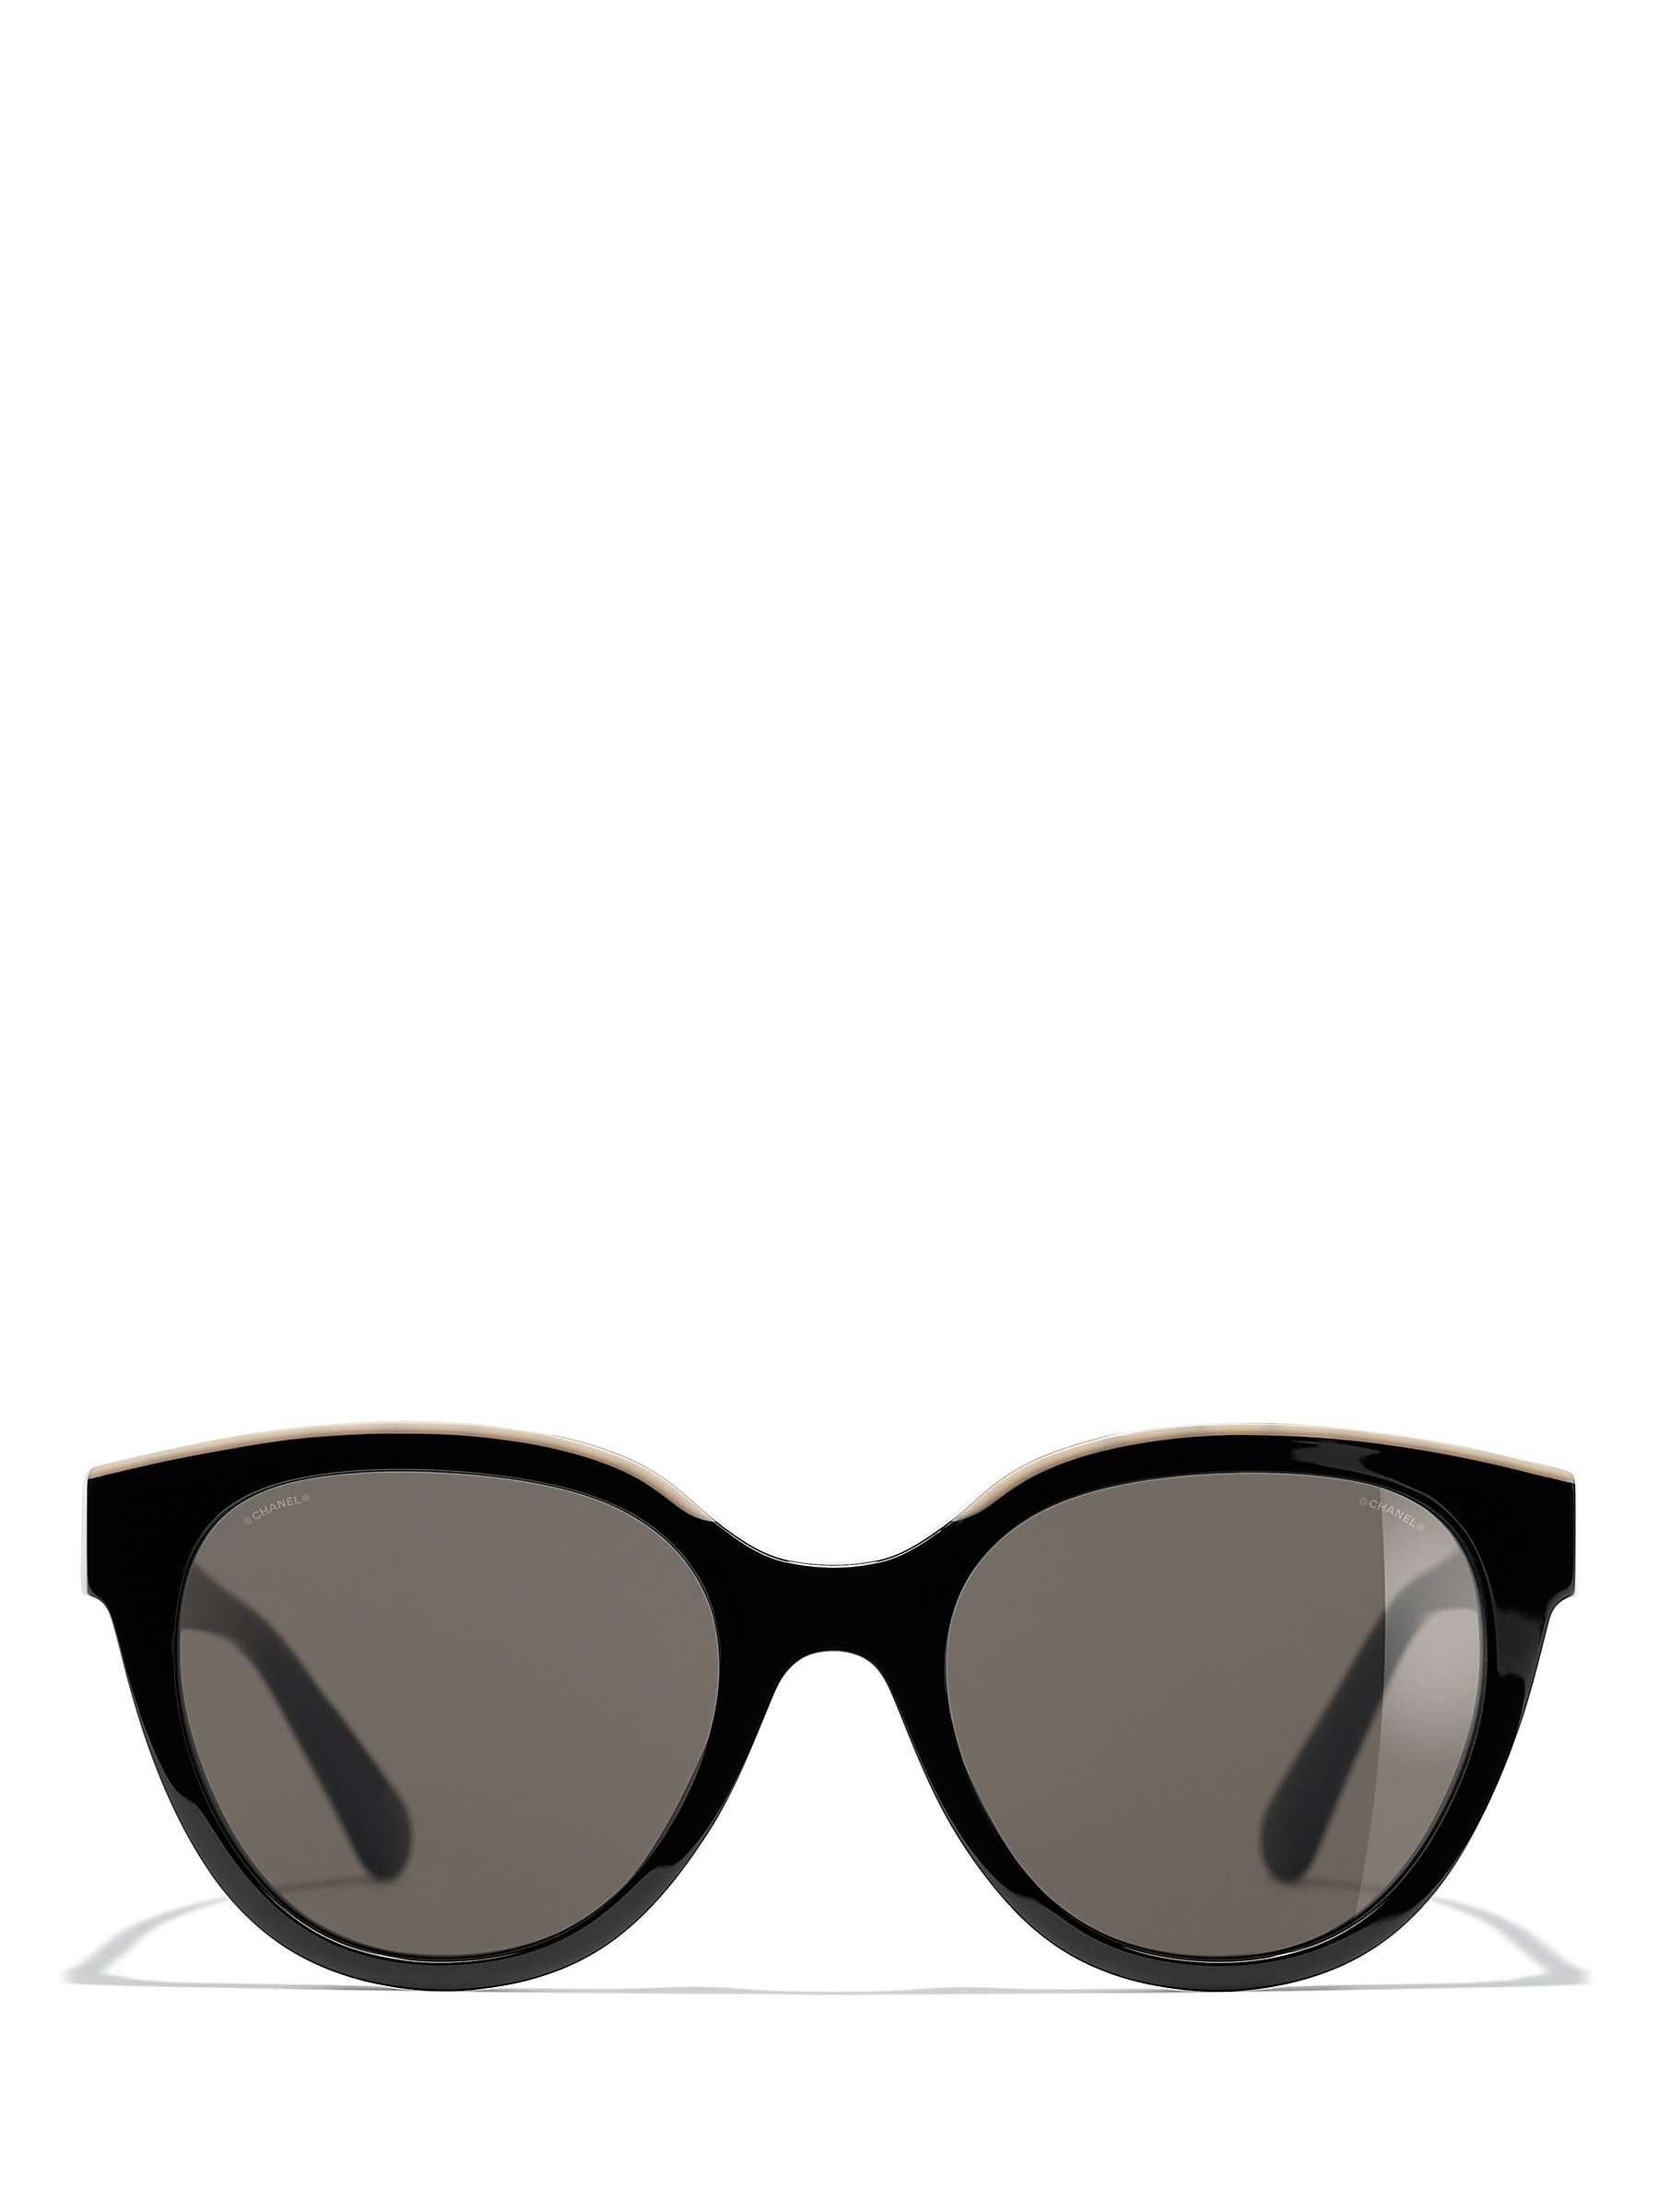 Buy CHANEL Oval Sunglasses CH5414 Black/Beige Online at johnlewis.com